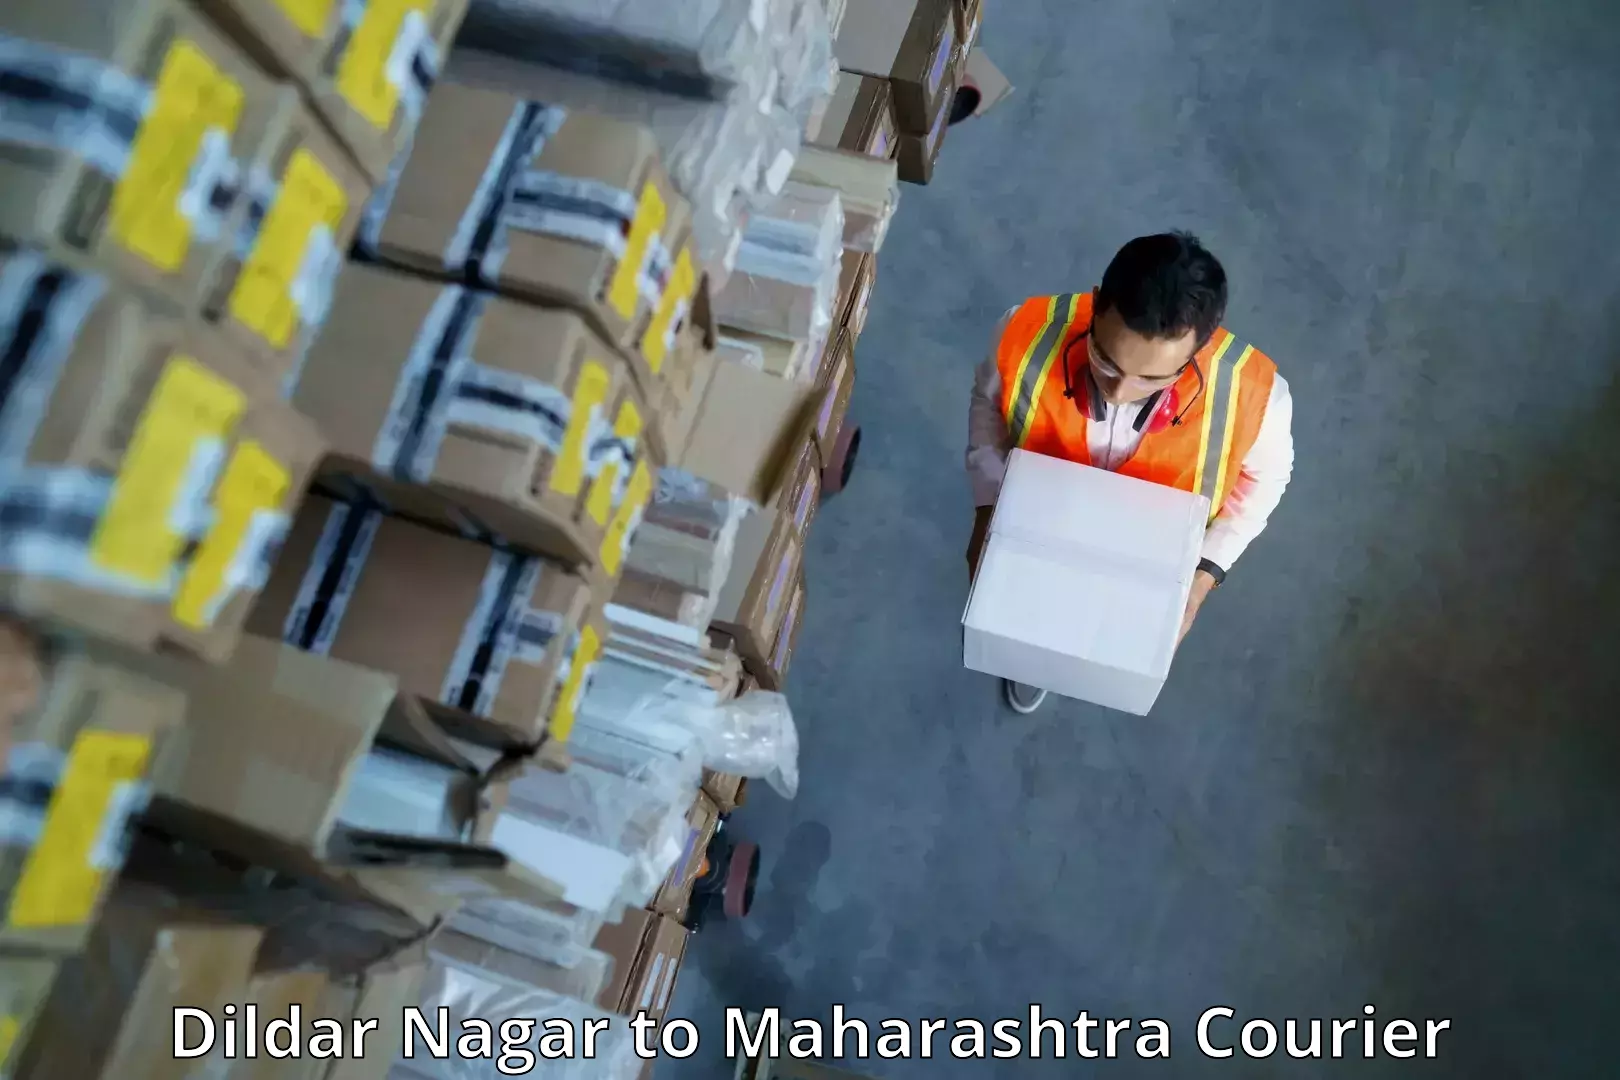 Courier service booking Dildar Nagar to Mahagaon